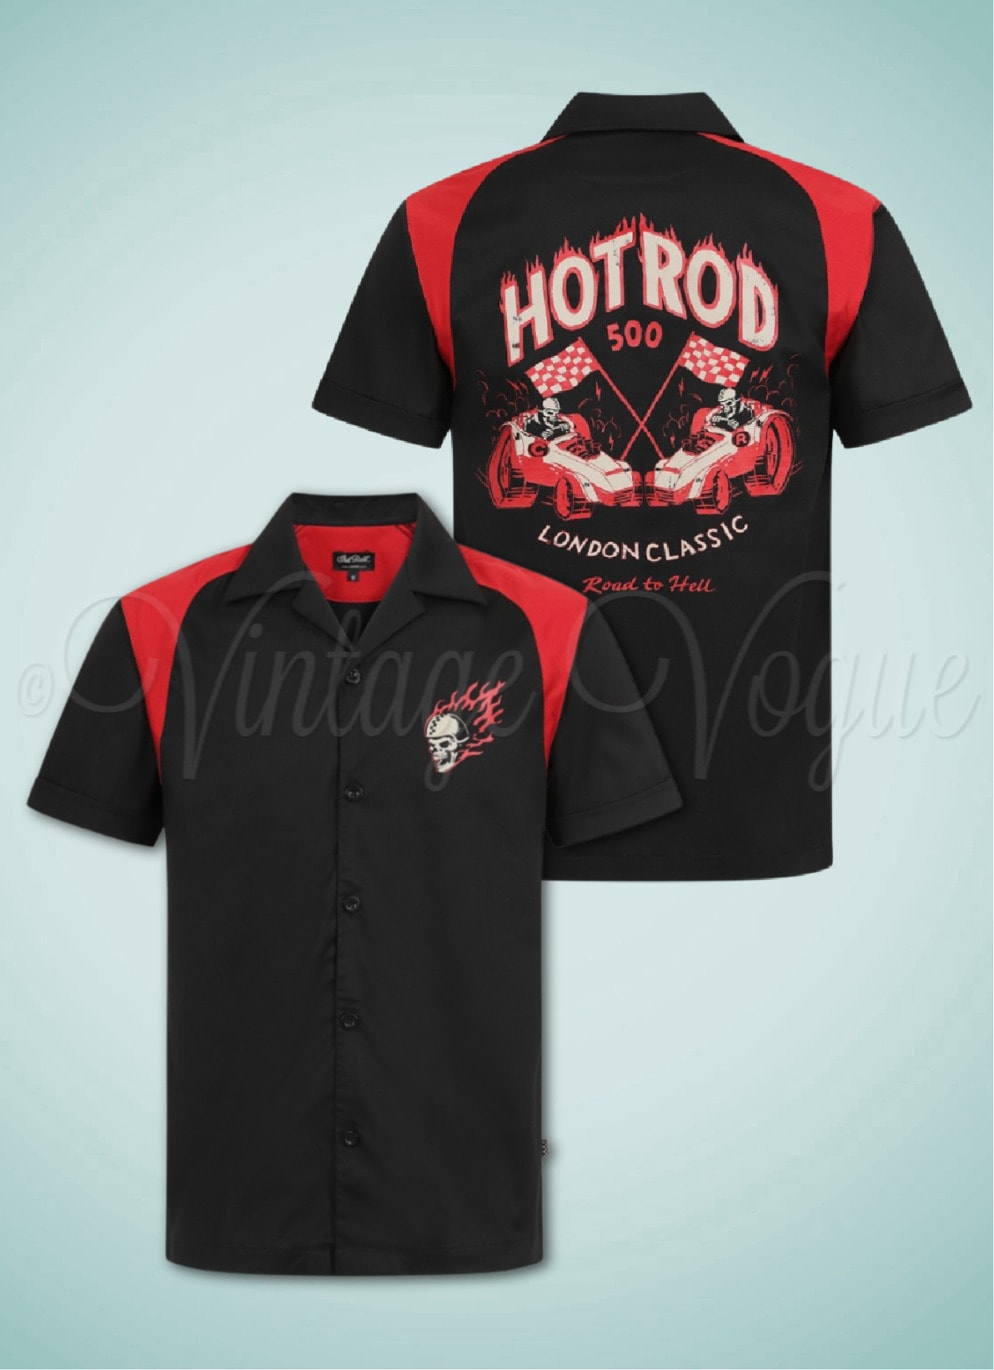 Chet Rock 50er Jahre Rockabilly Print Herren Hemd Hot Rod Bowling Shirt in Schwarz